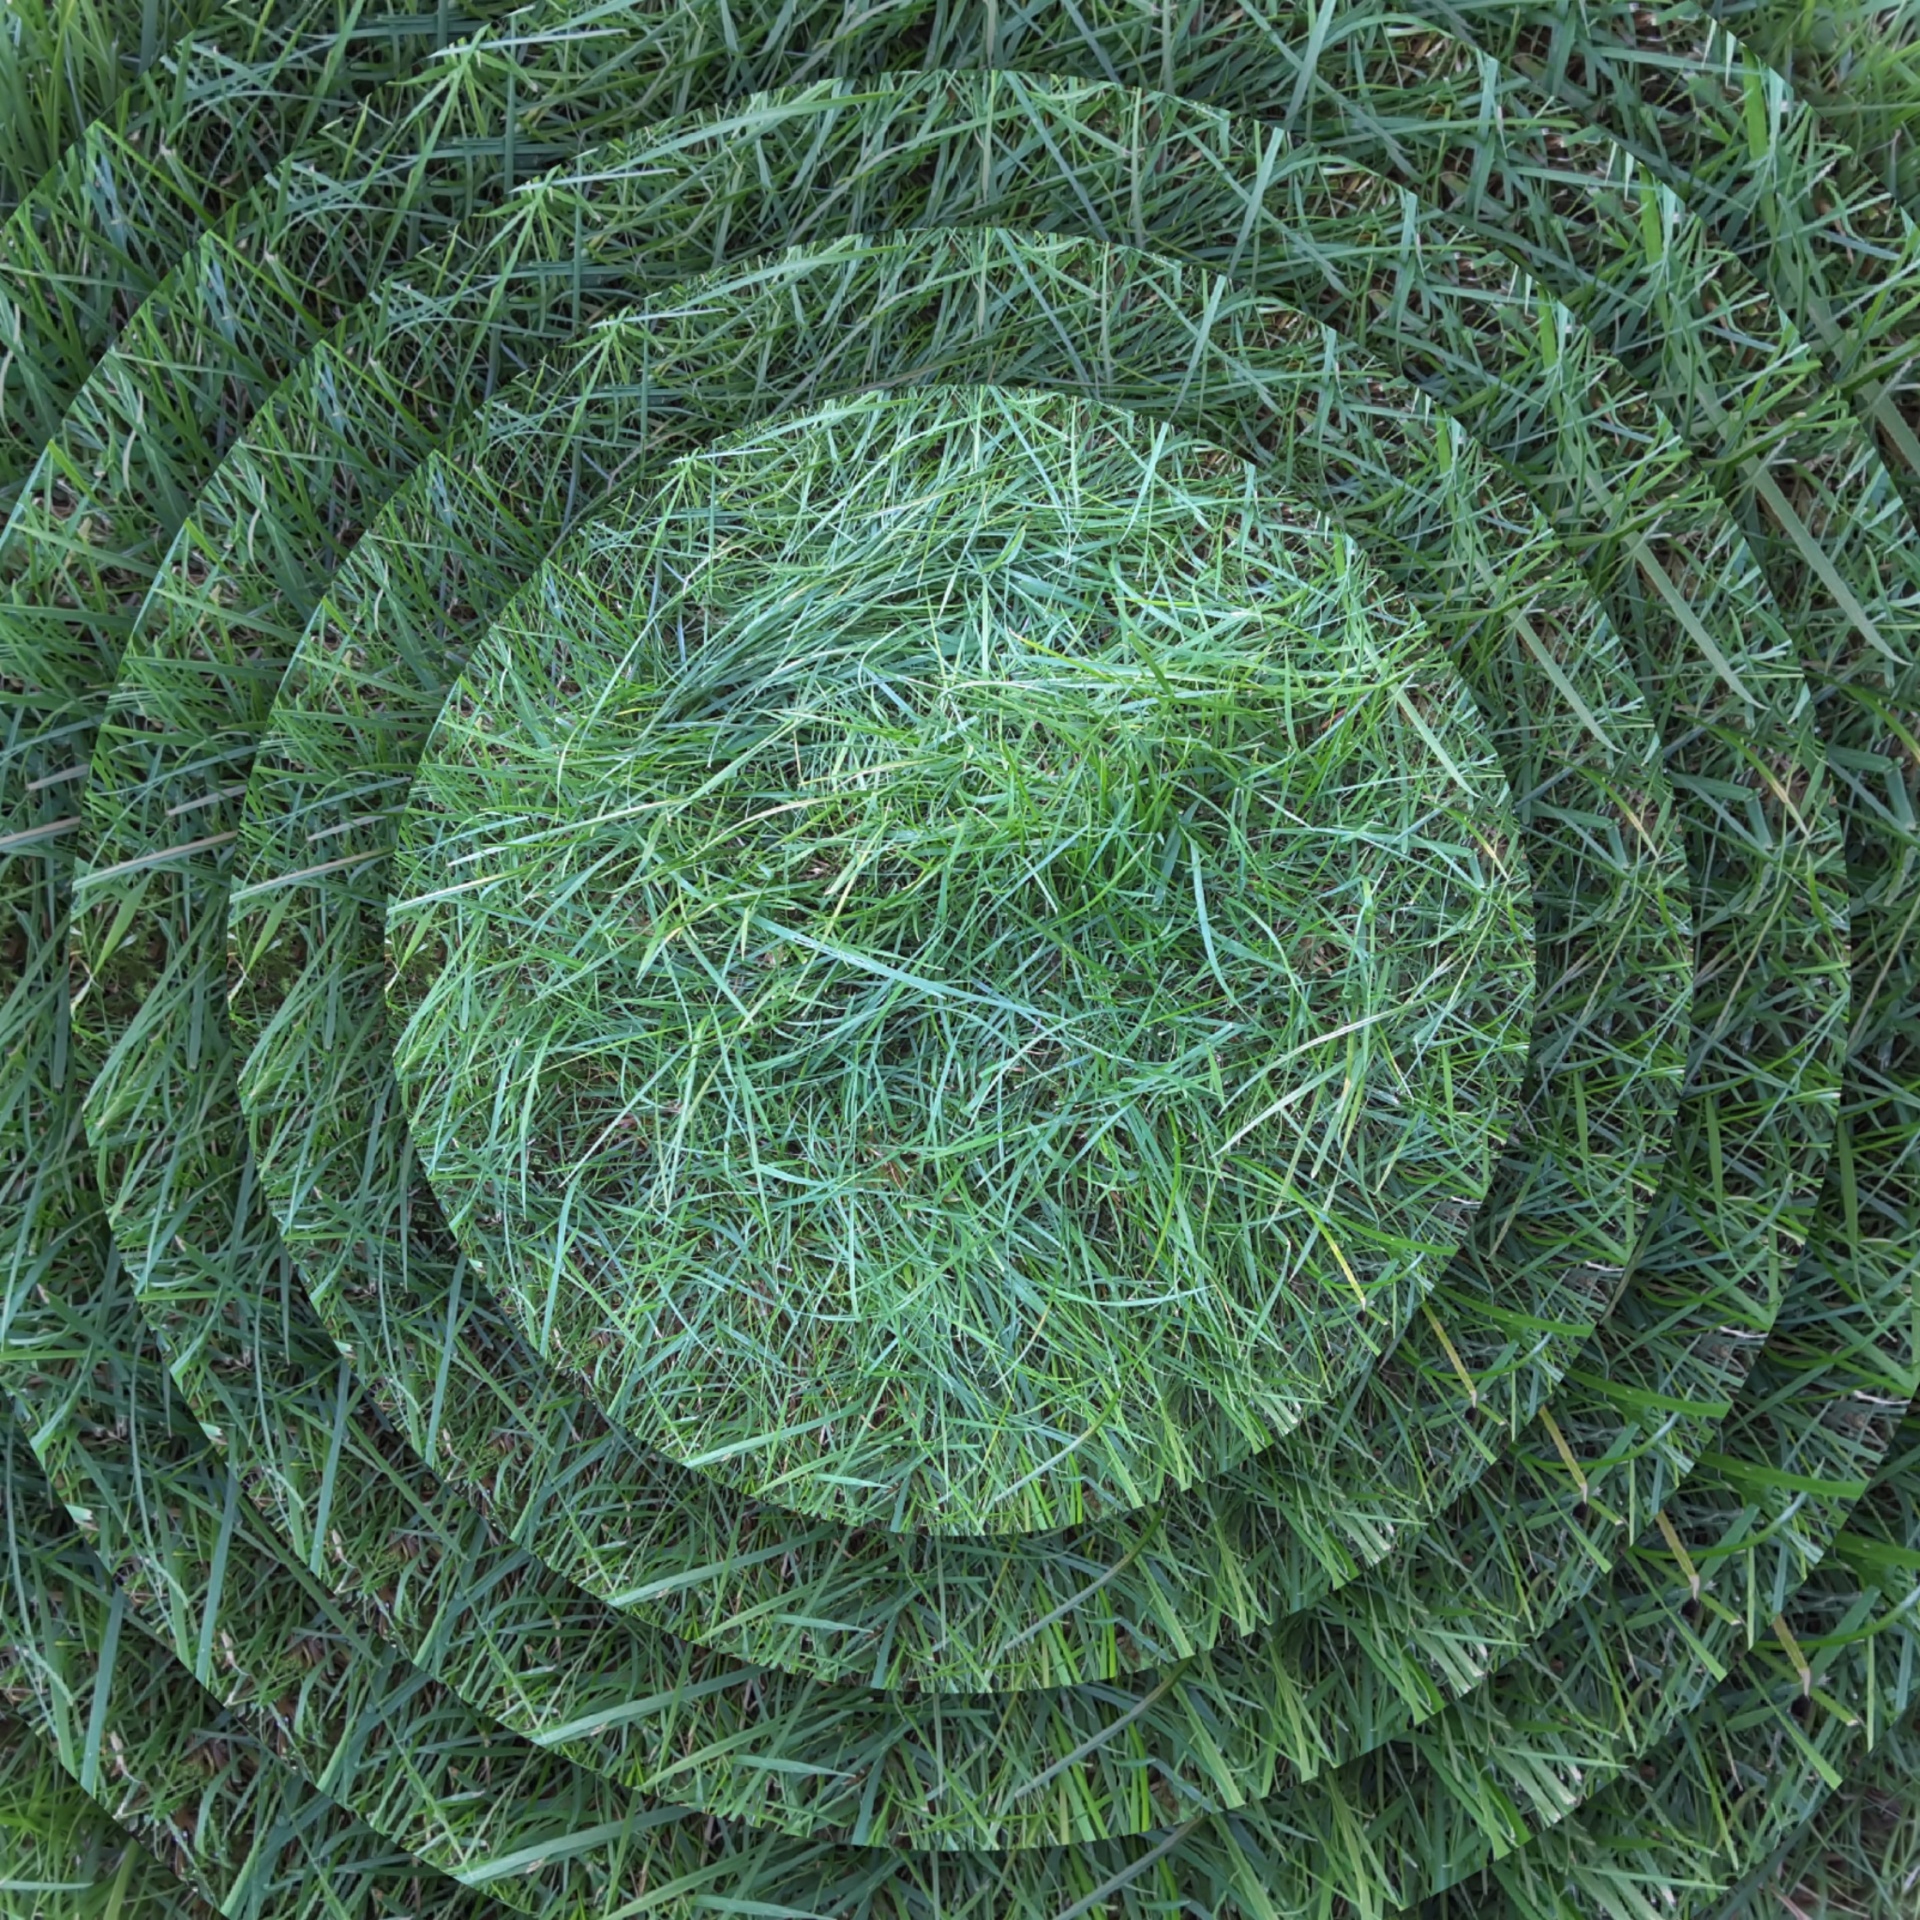 wallpaper grassy concentric free photo